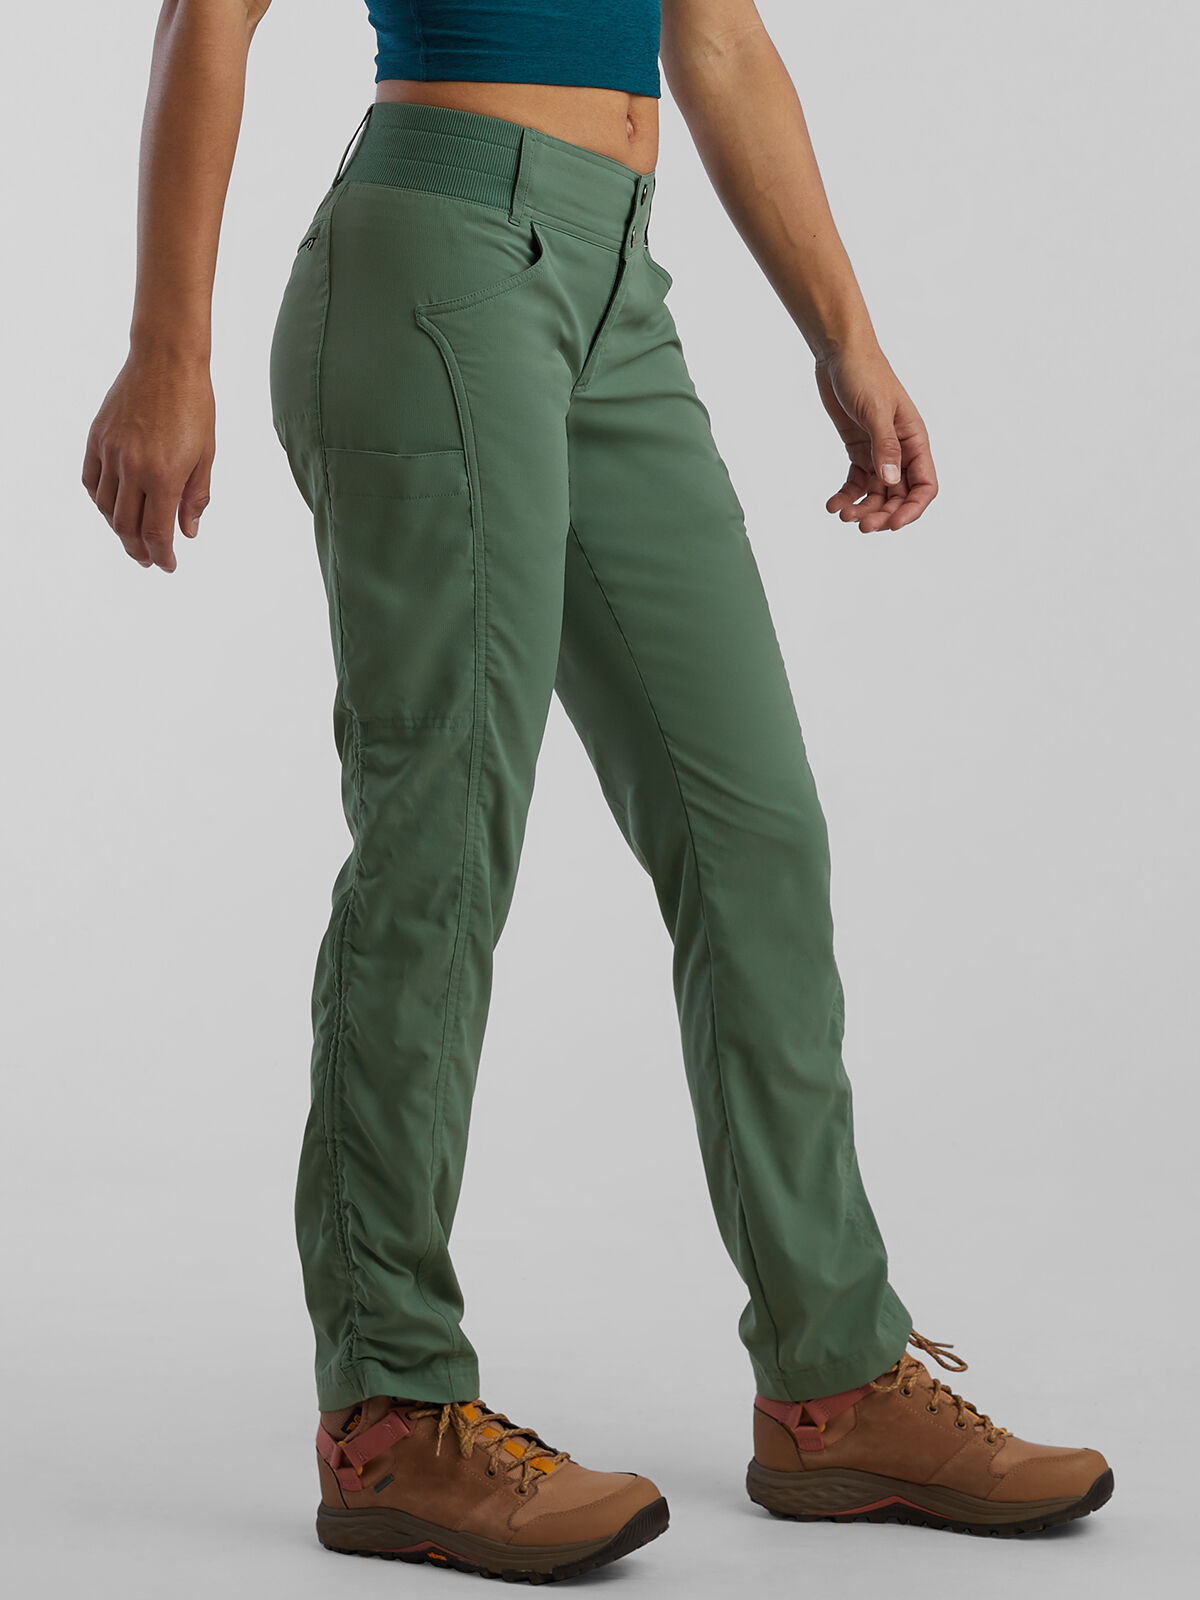 Hi-Tec Women's Hiking Pants | 1013582 | Outdoor Warehouse